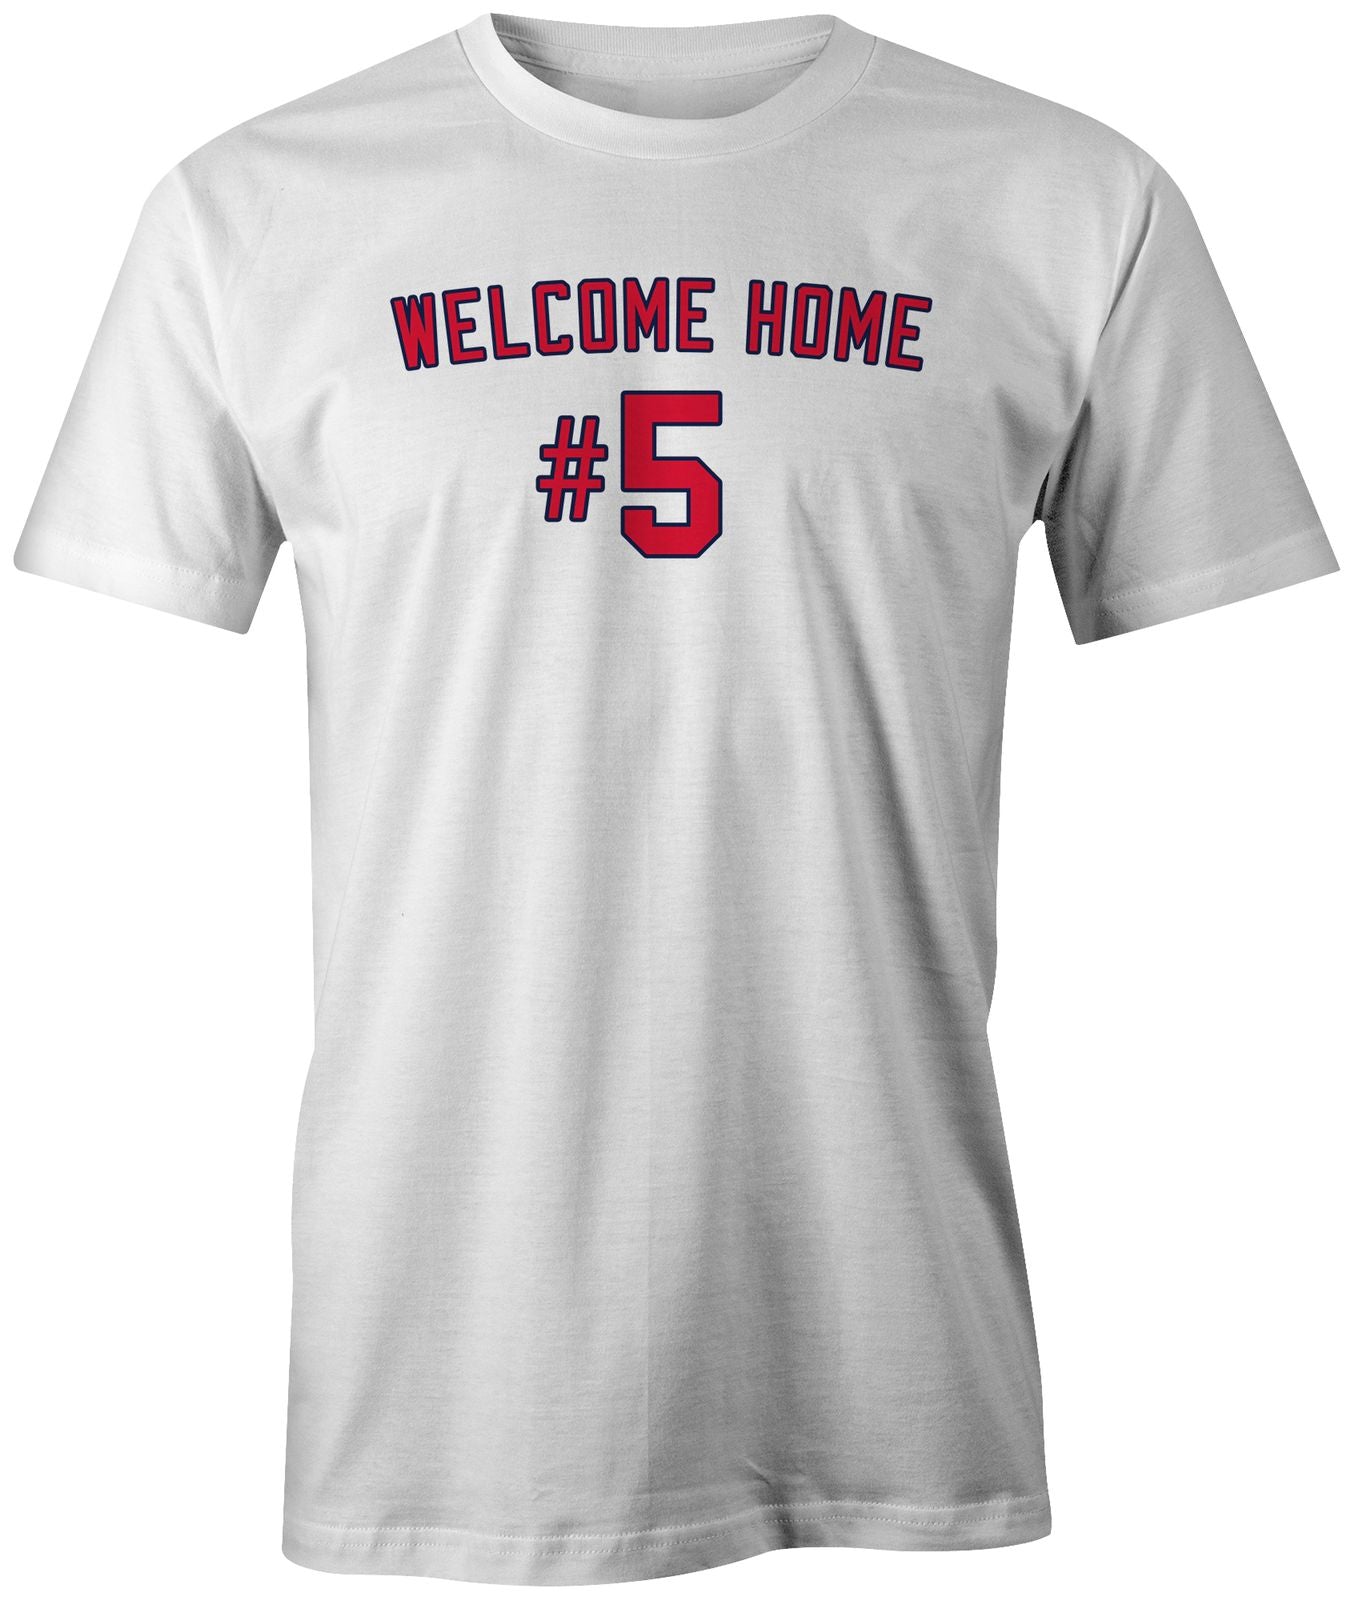 welcome home albert pujols #5 5 st louis cardinals molina wainwright baseball hot stove busch stadium